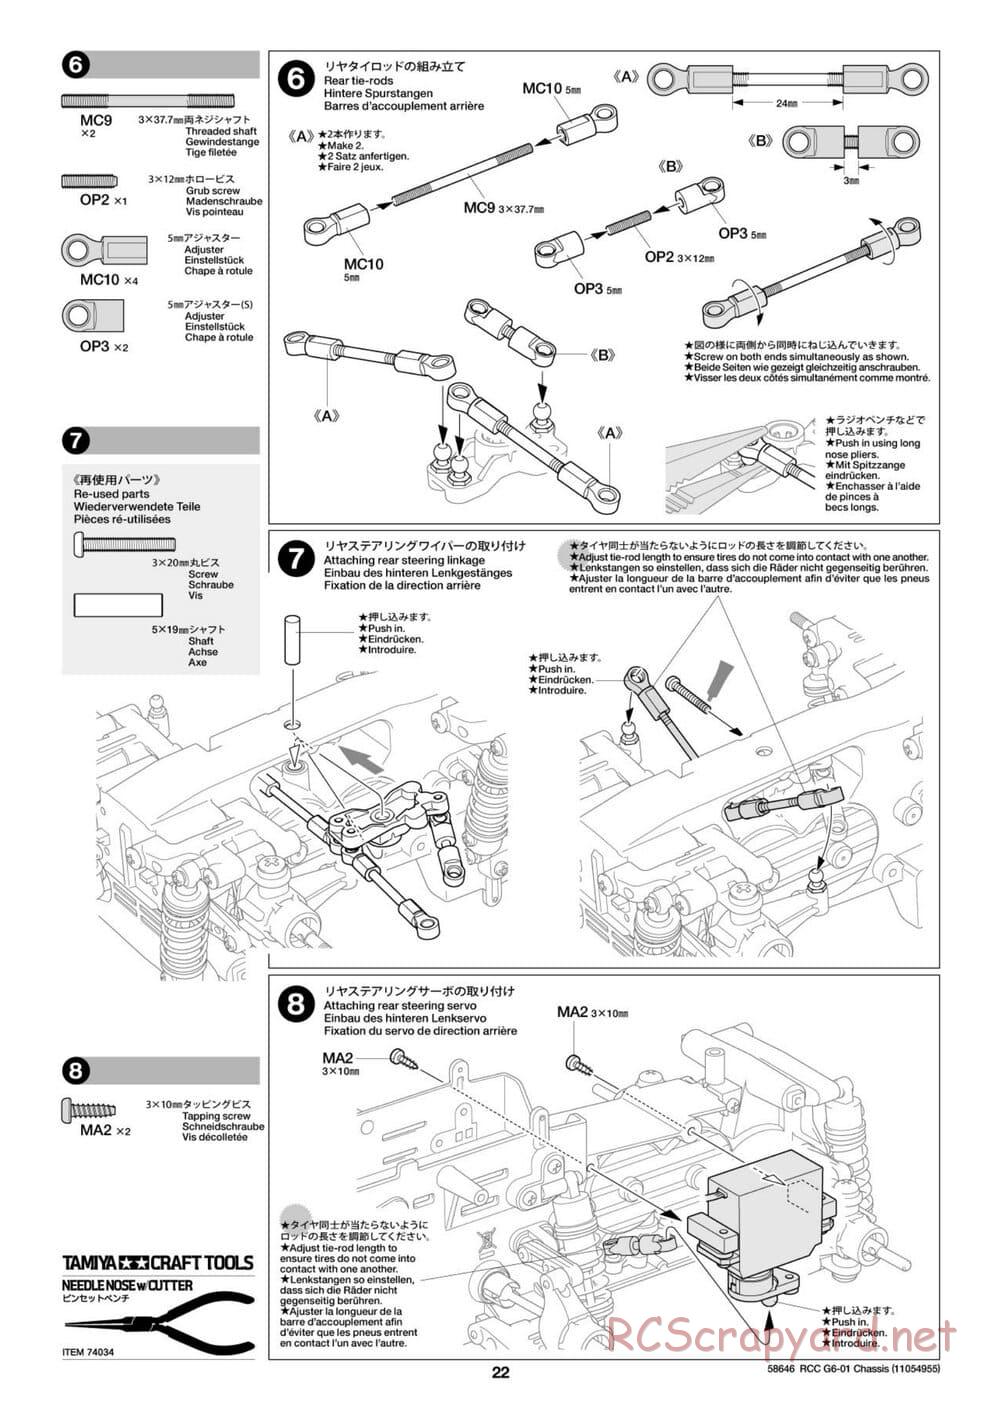 Tamiya - Konghead 6x6 - G6-01 Chassis - Manual - Page 22